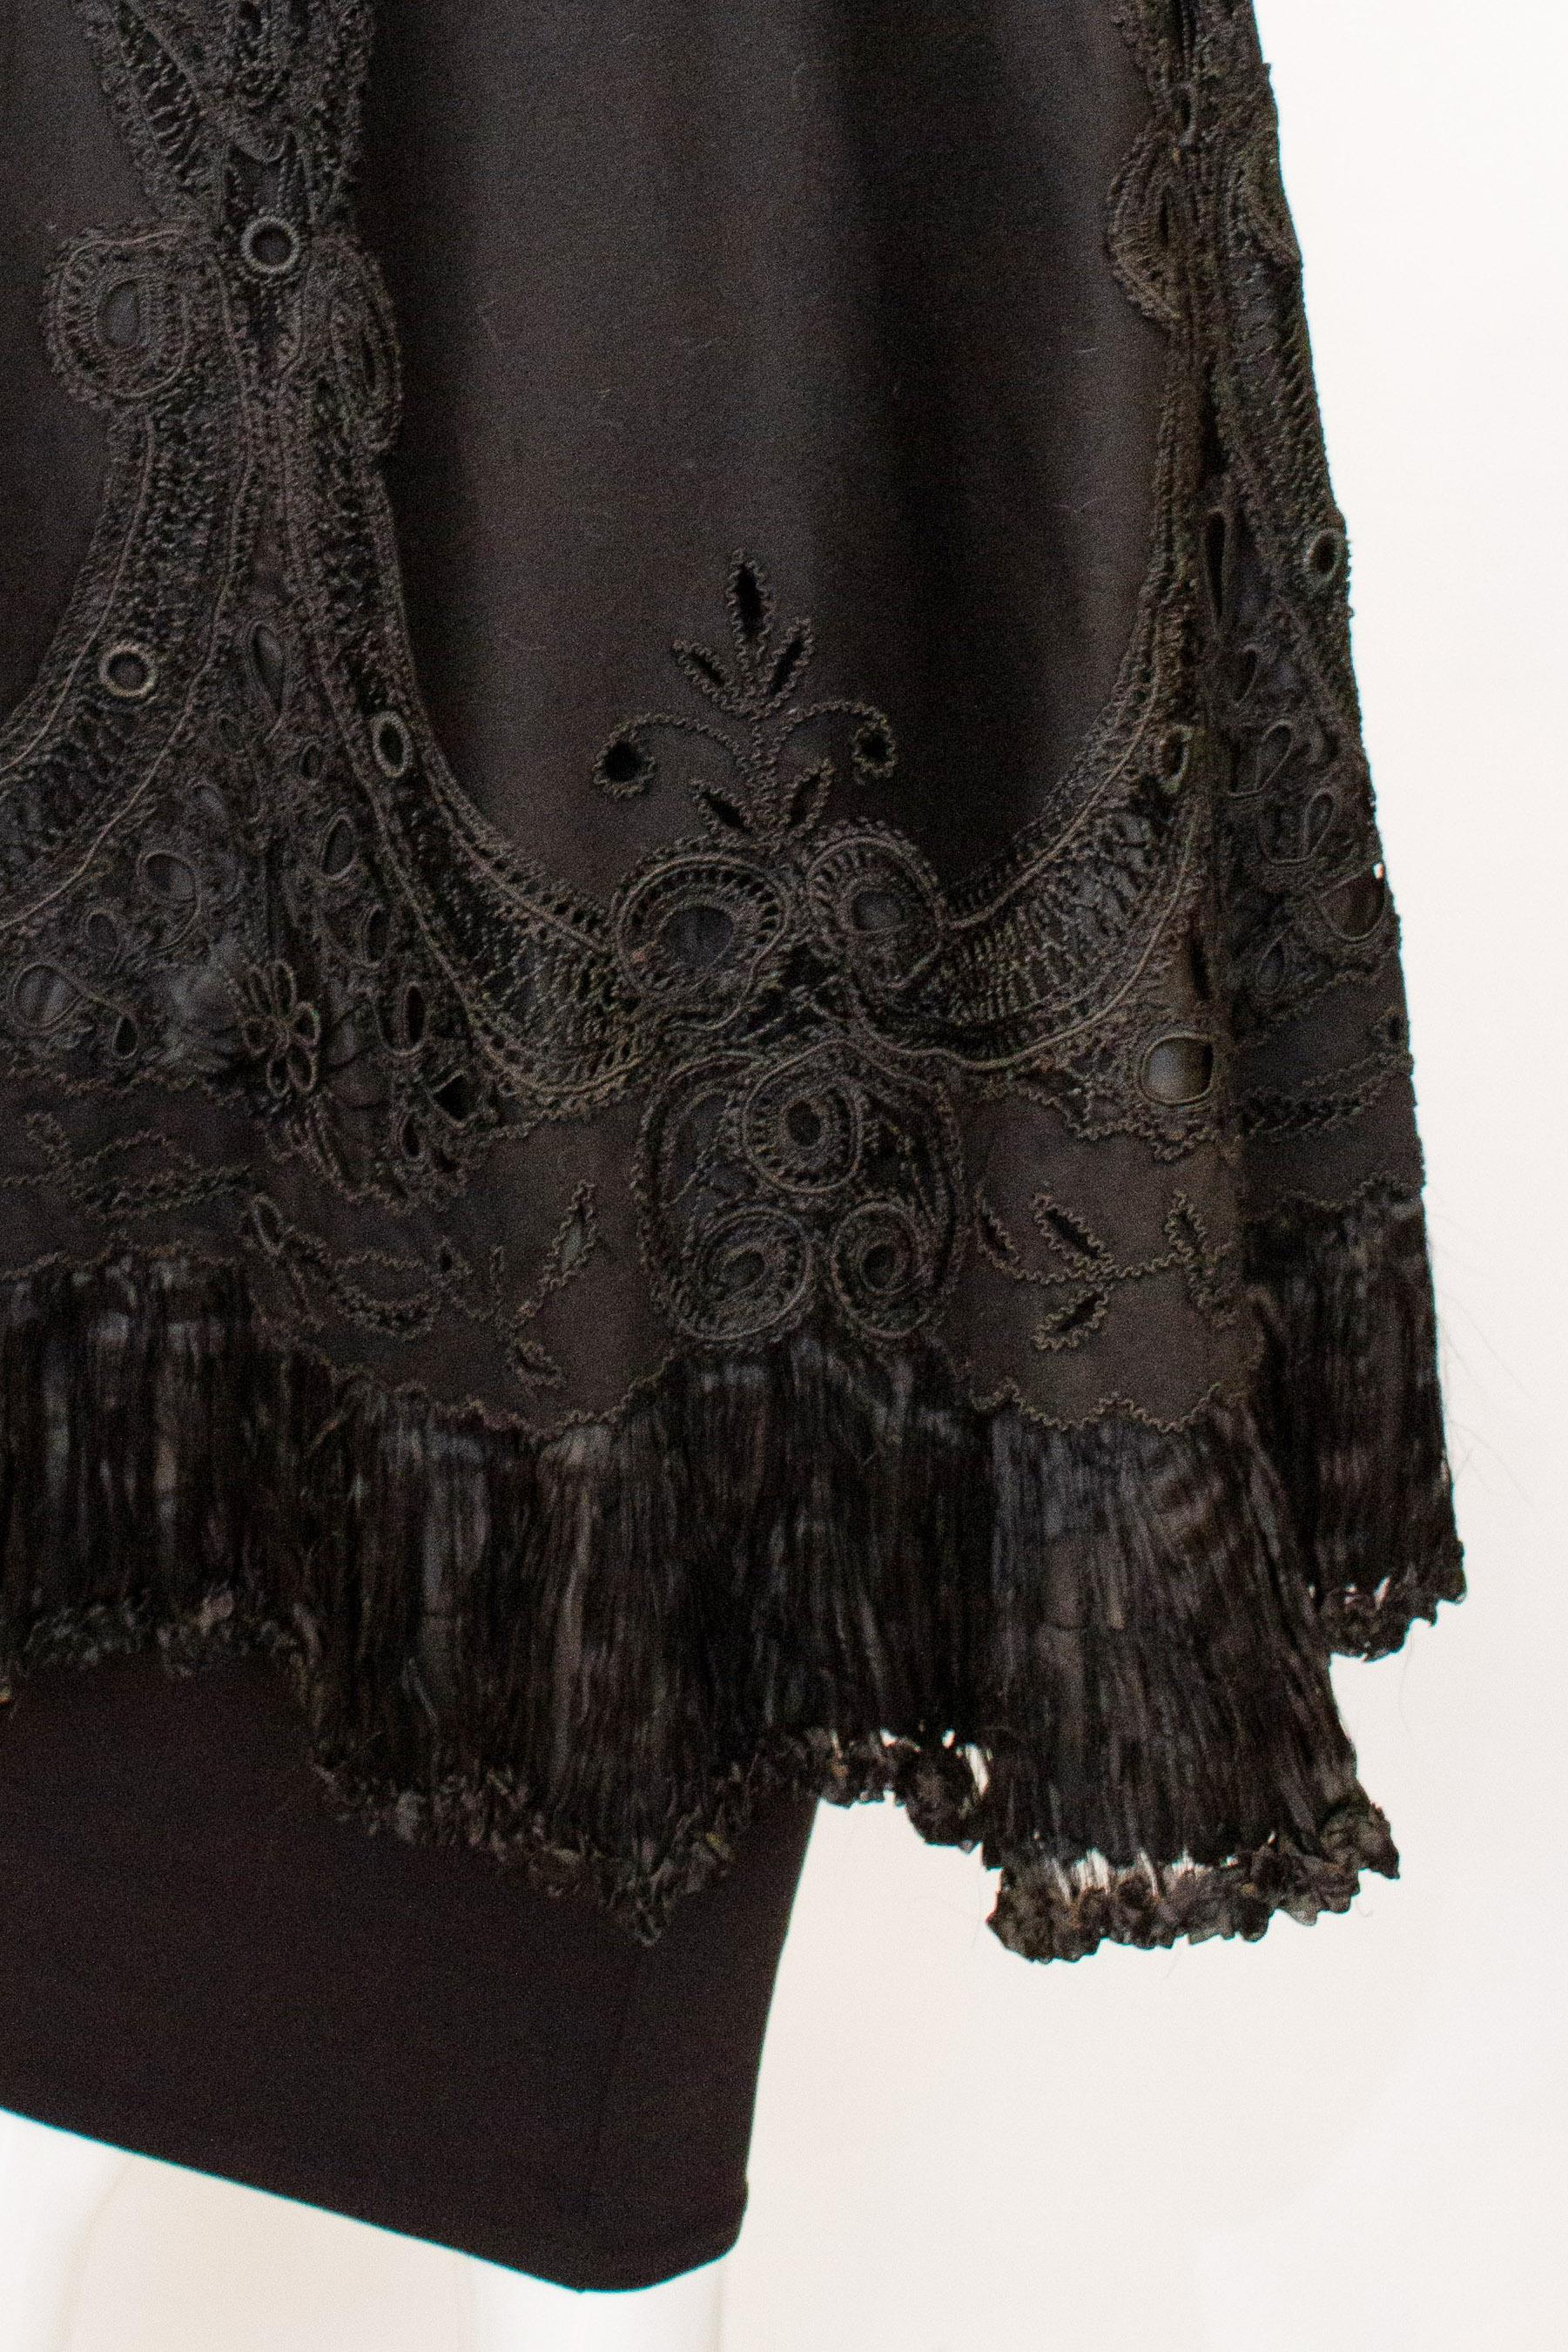 Vintage Black Felt Cape with Embroidery Detail. 1